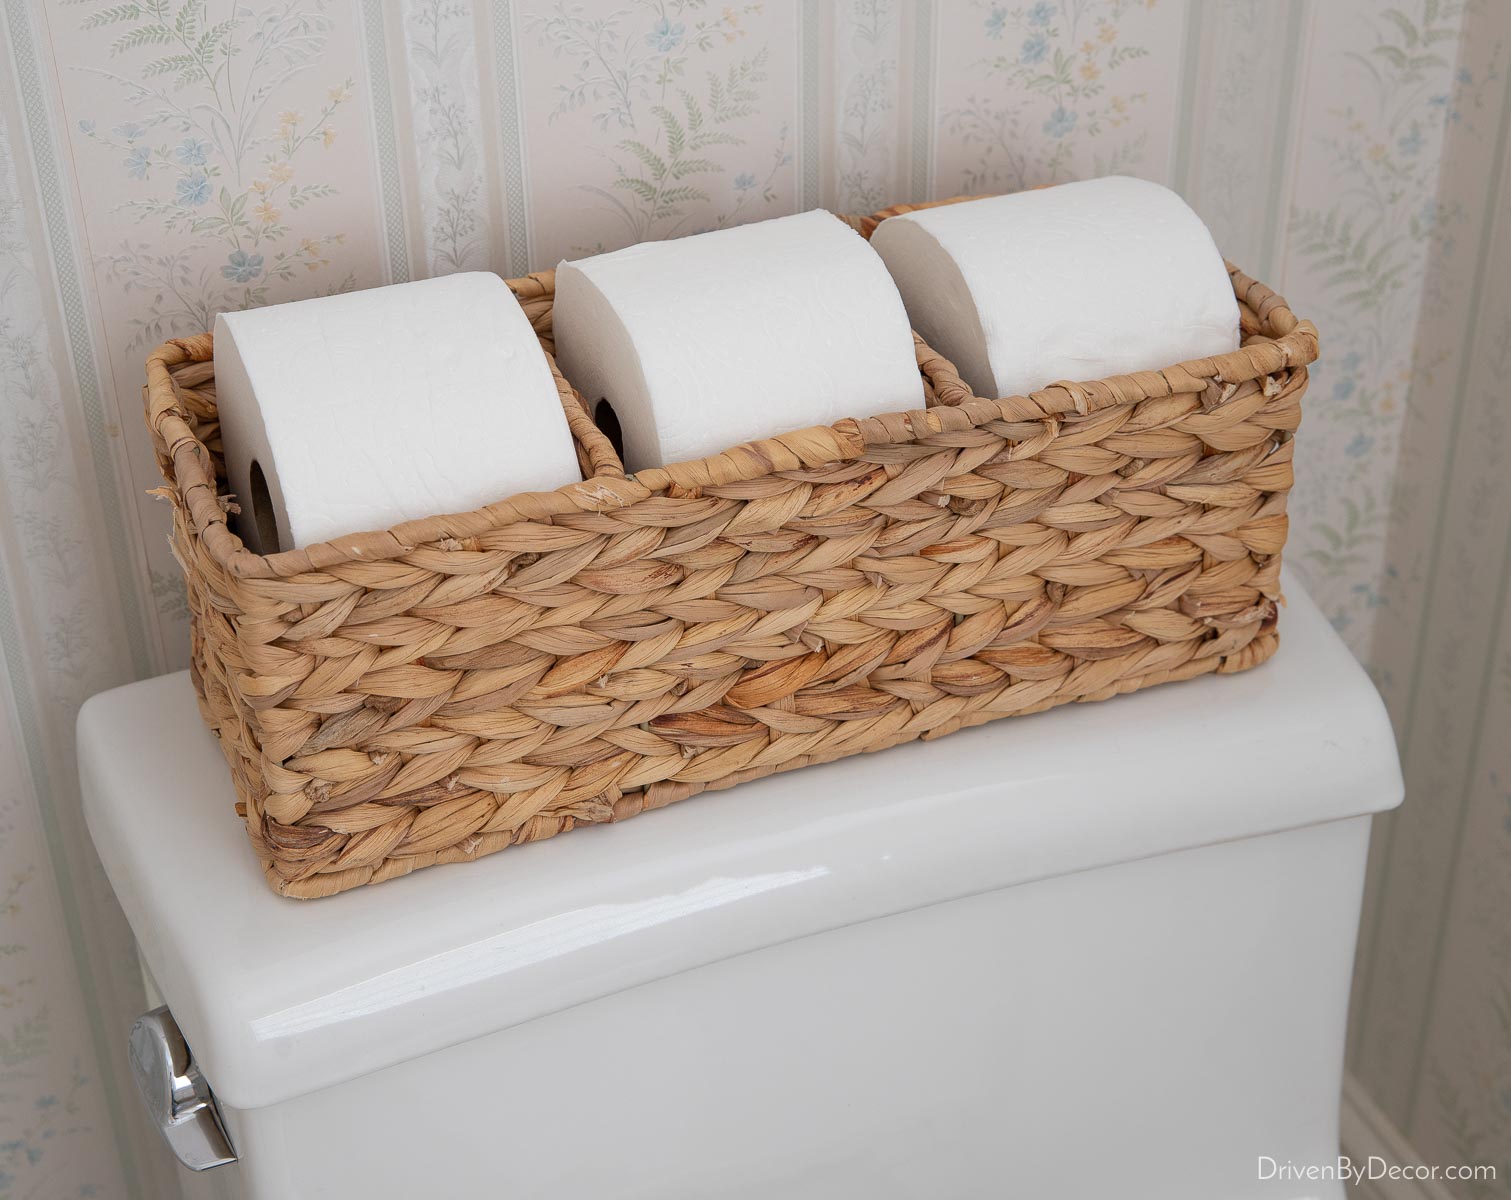 Toilet tank basket holding rolls of toilet paper